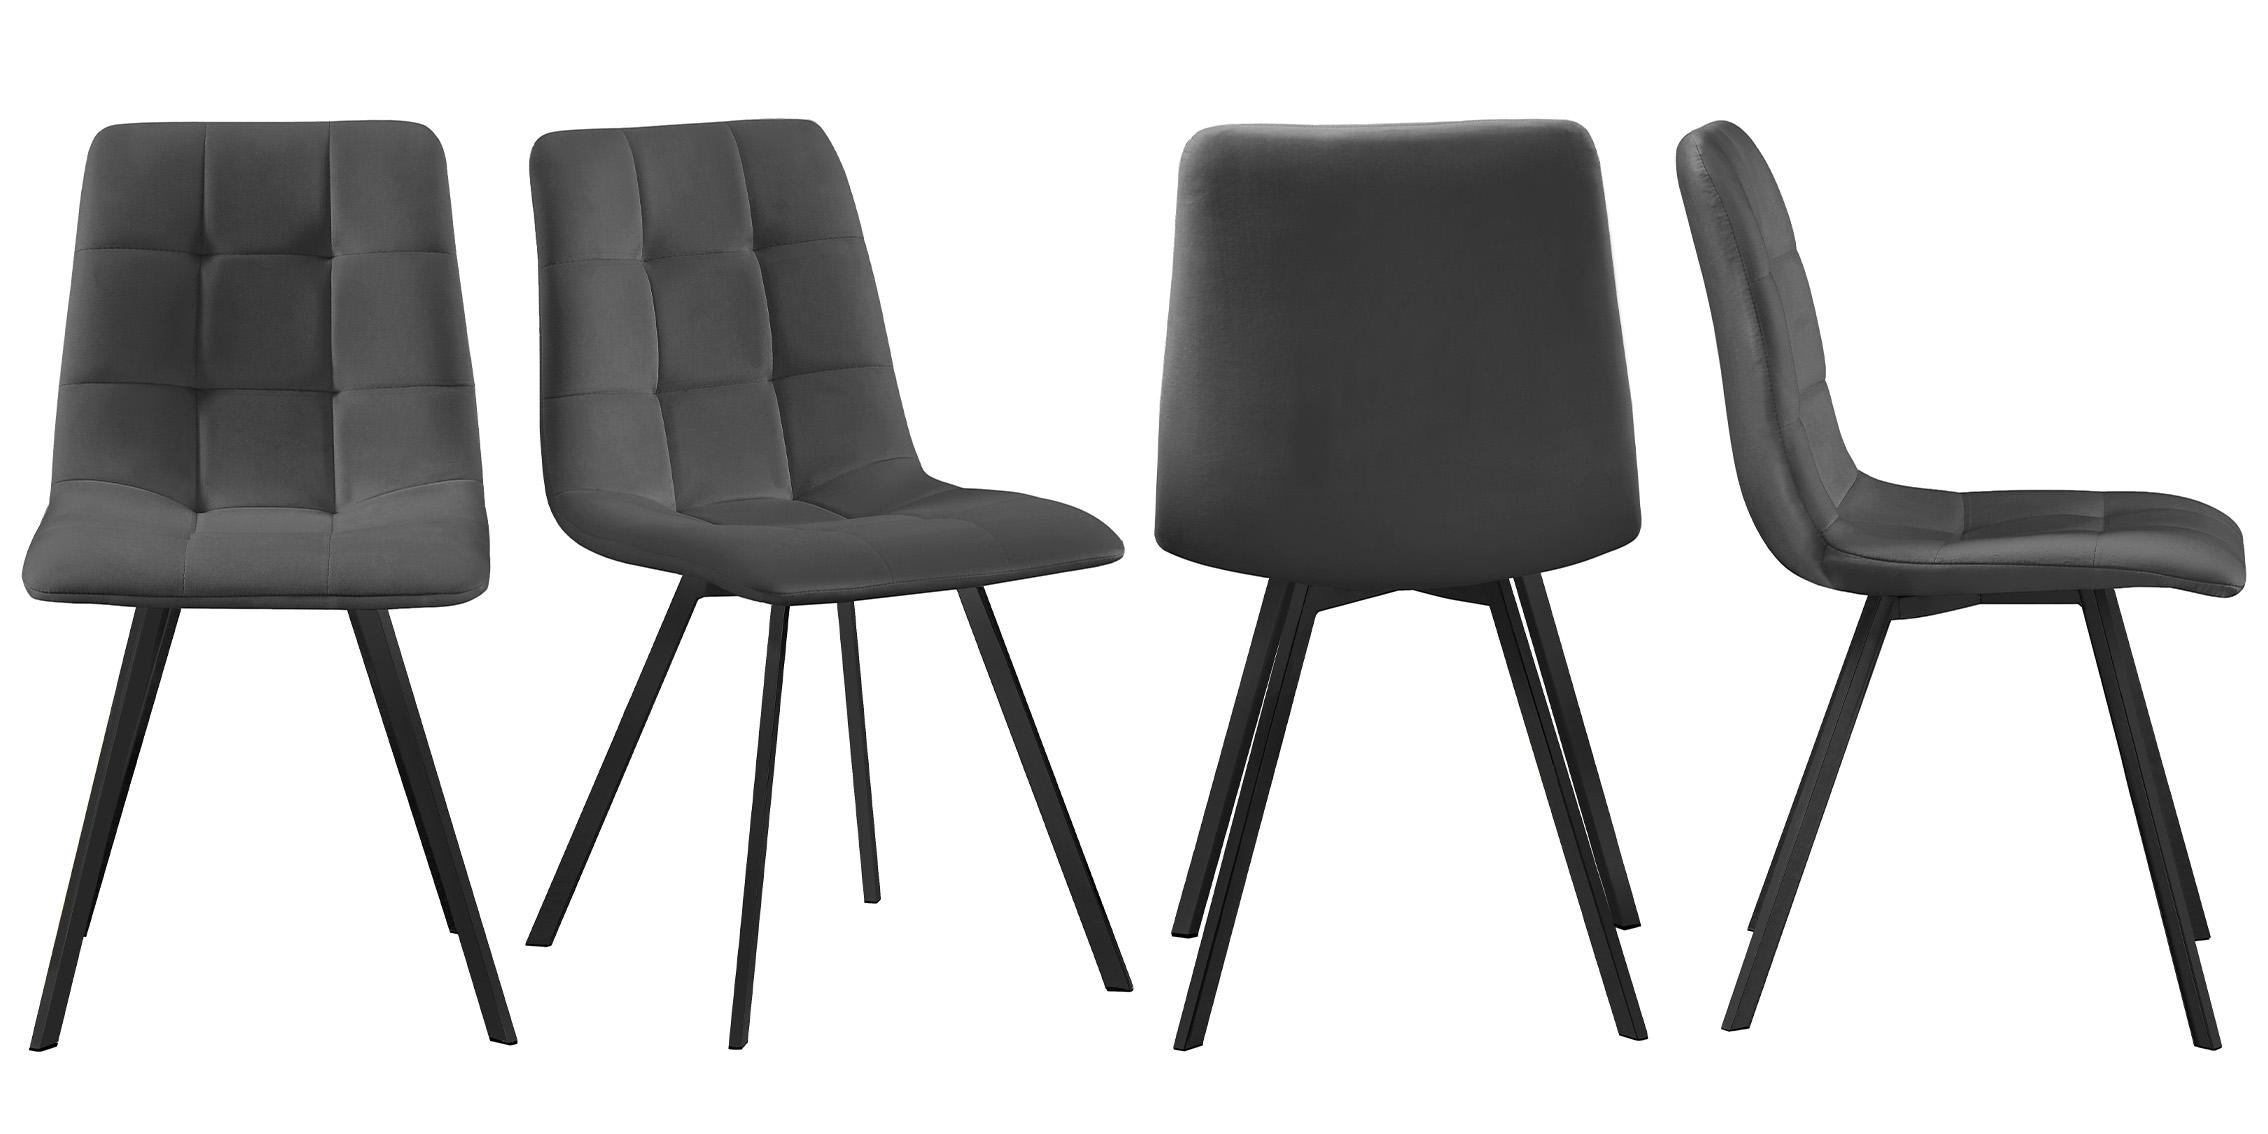 Contemporary, Modern Dining Chair Set ANNIE 981Grey-C 981Grey-C-Set-4 in Gray, Black Fabric